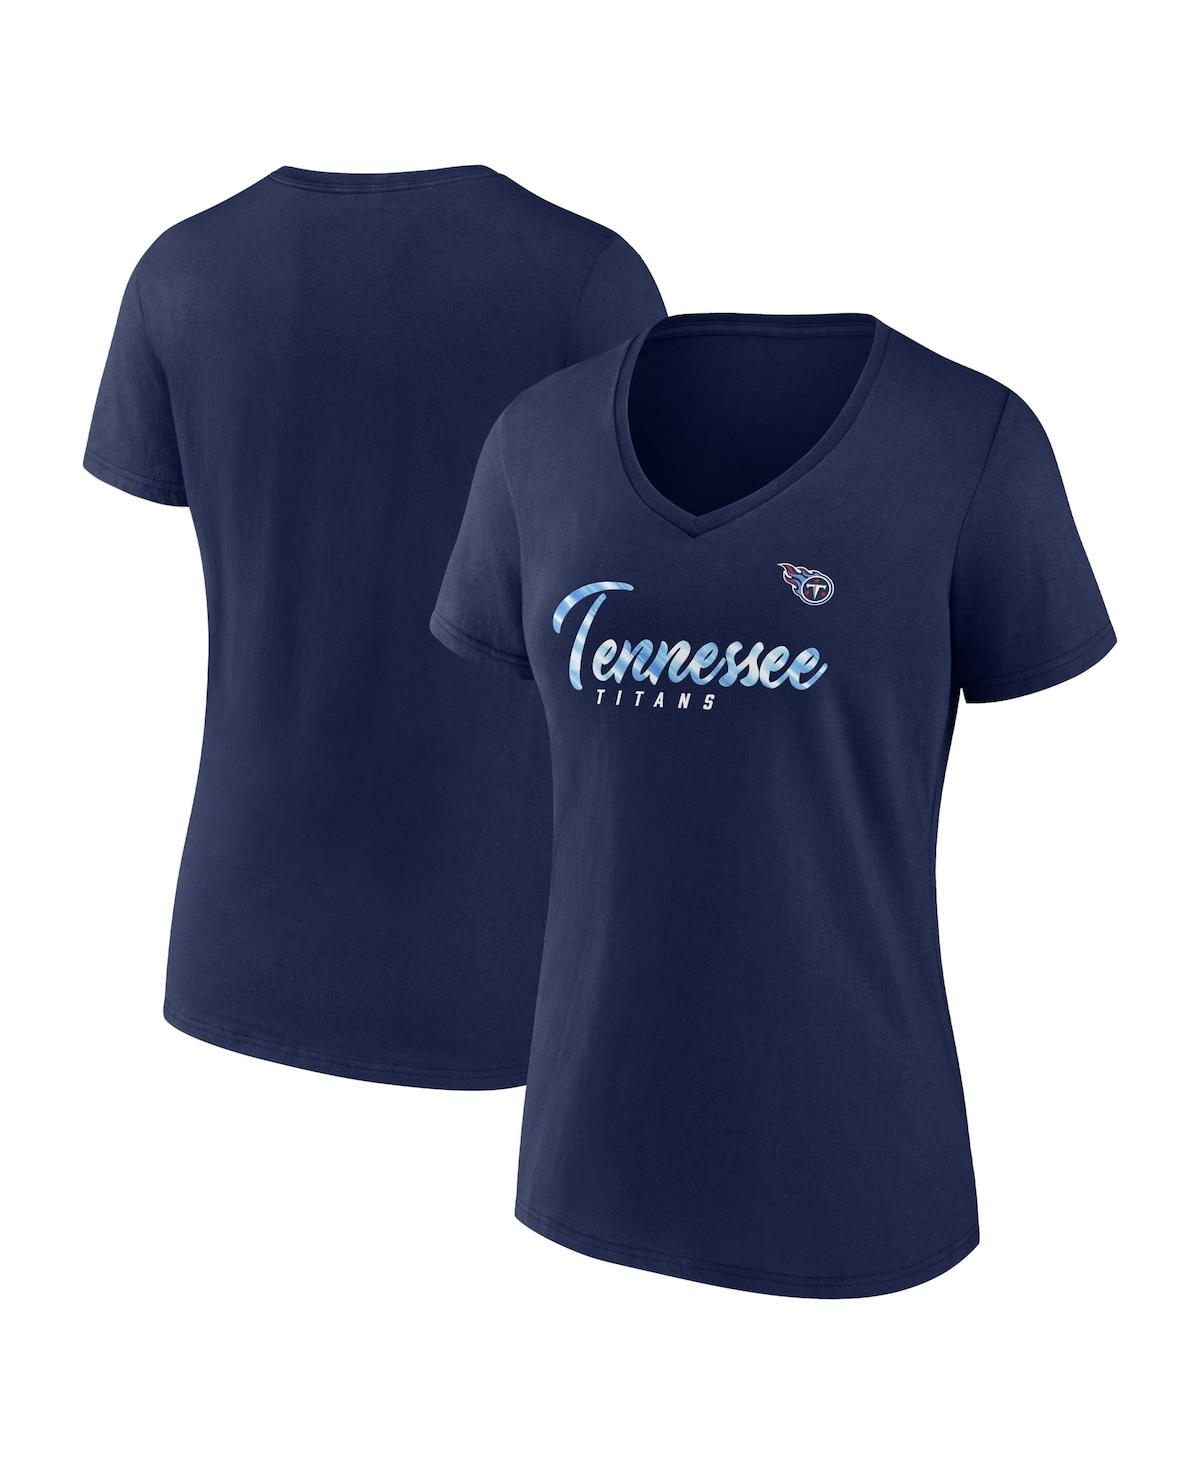 Fanatics Women's  Navy Tennessee Titans Shine Time V-neck T-shirt